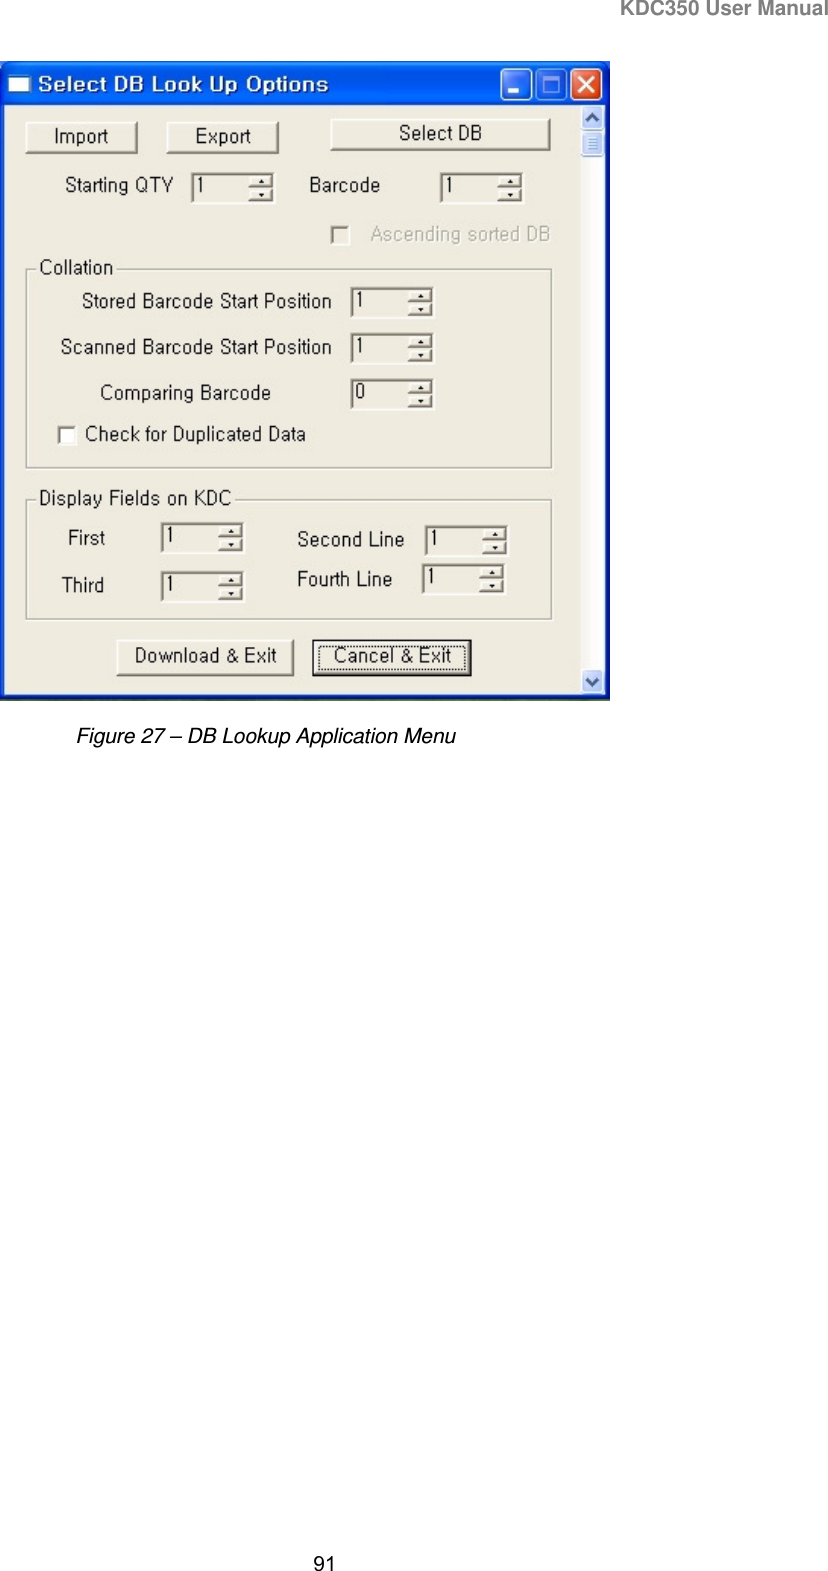 KDC350 User Manual  91      Figure 27 – DB Lookup Application Menu 